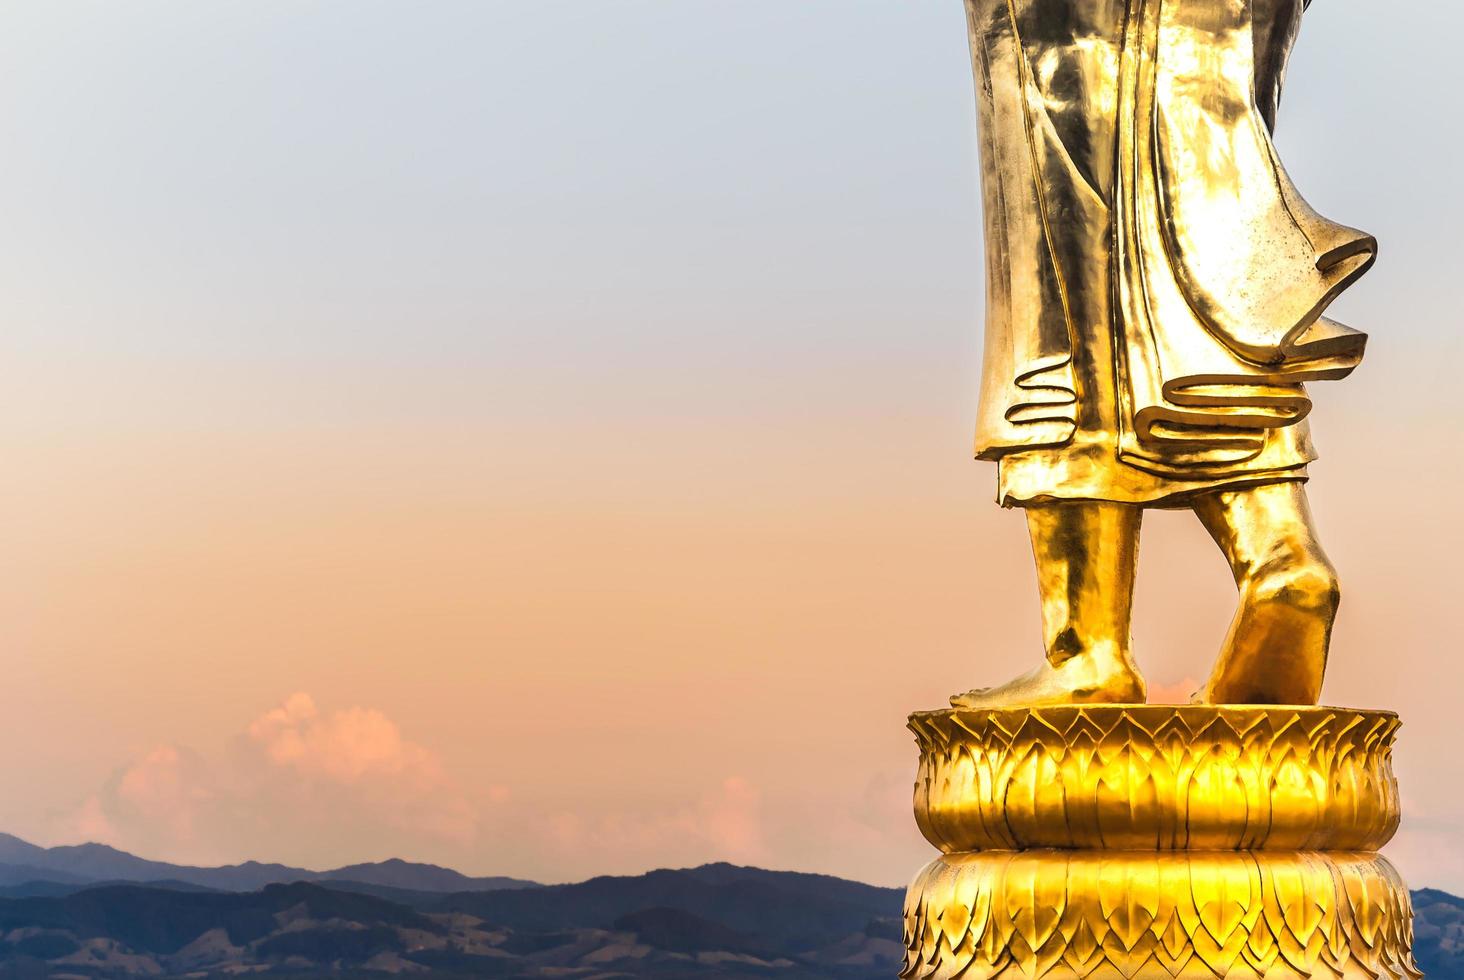 buddhastaty, den nedre delen, med bergsbakgrund vid berömt land mark wat phra that khao noi nan provinsen norra thailand foto